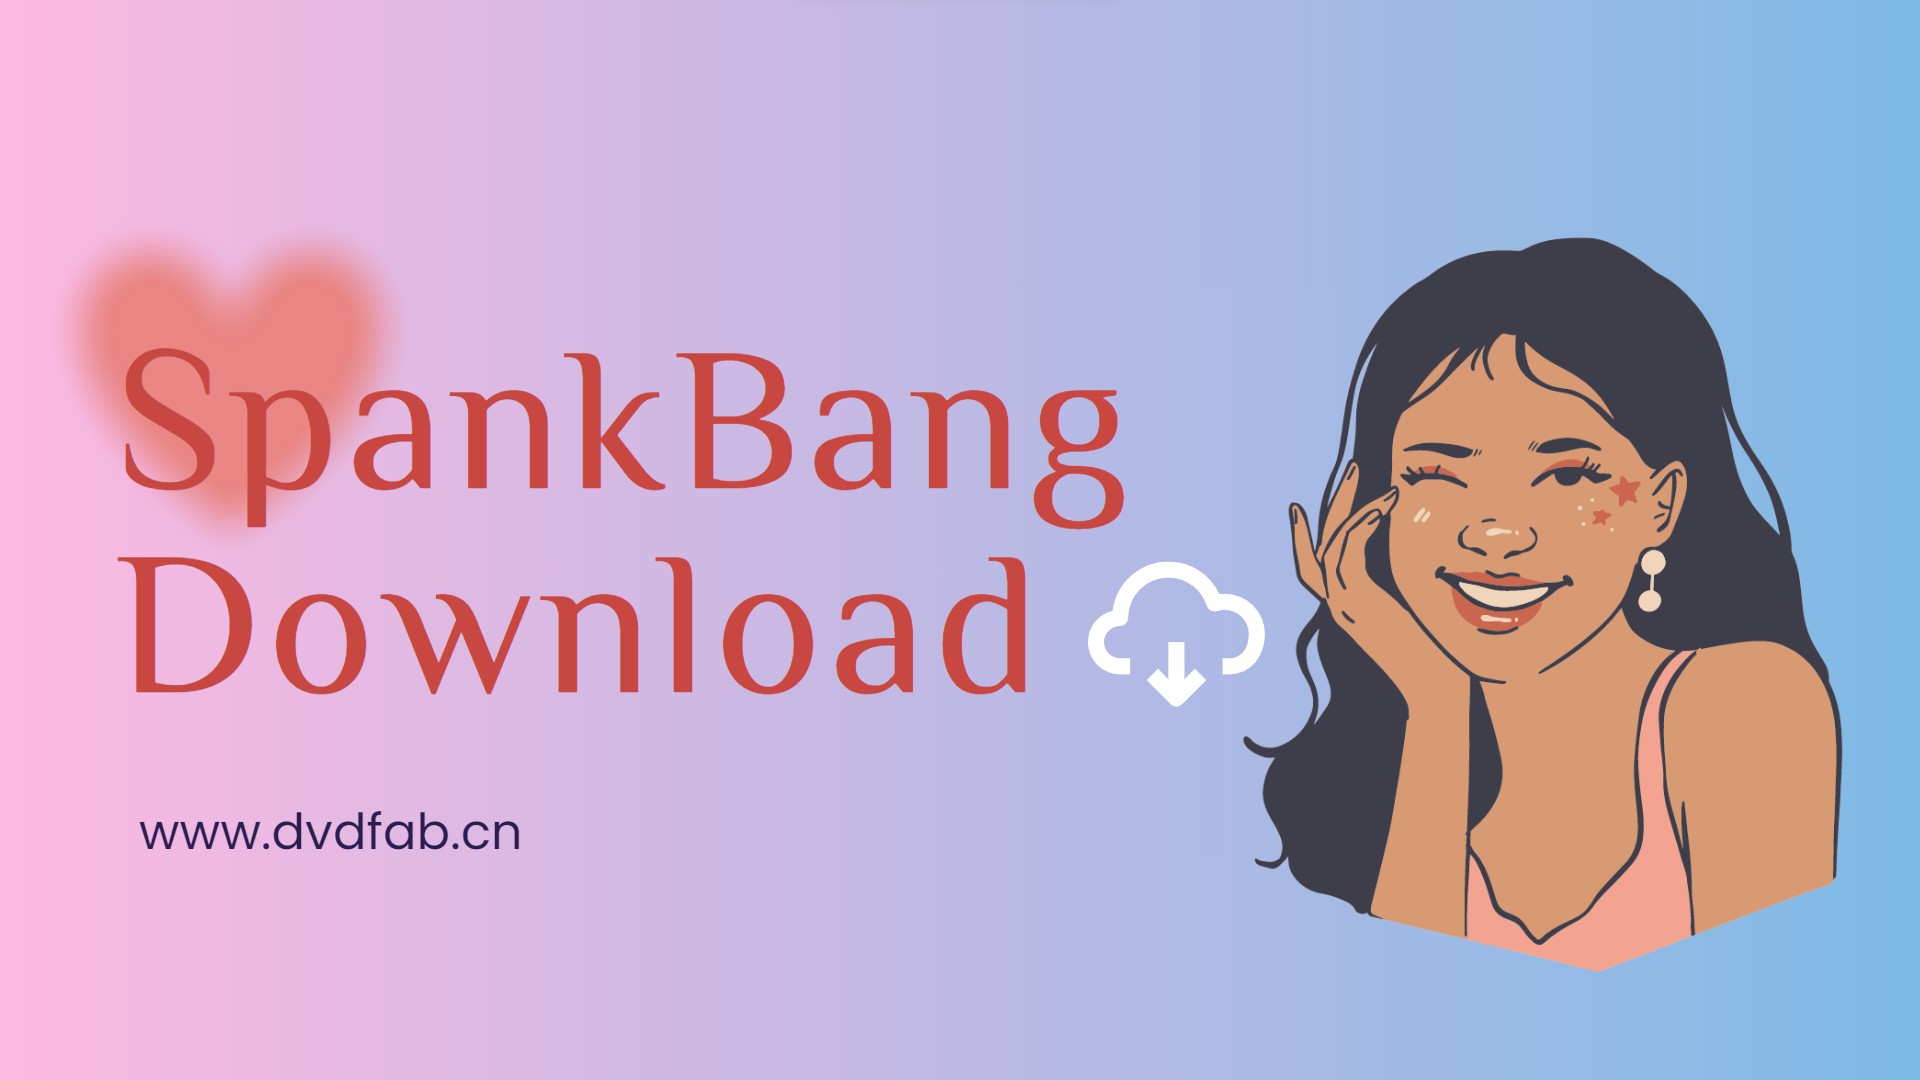 Spankbang url download